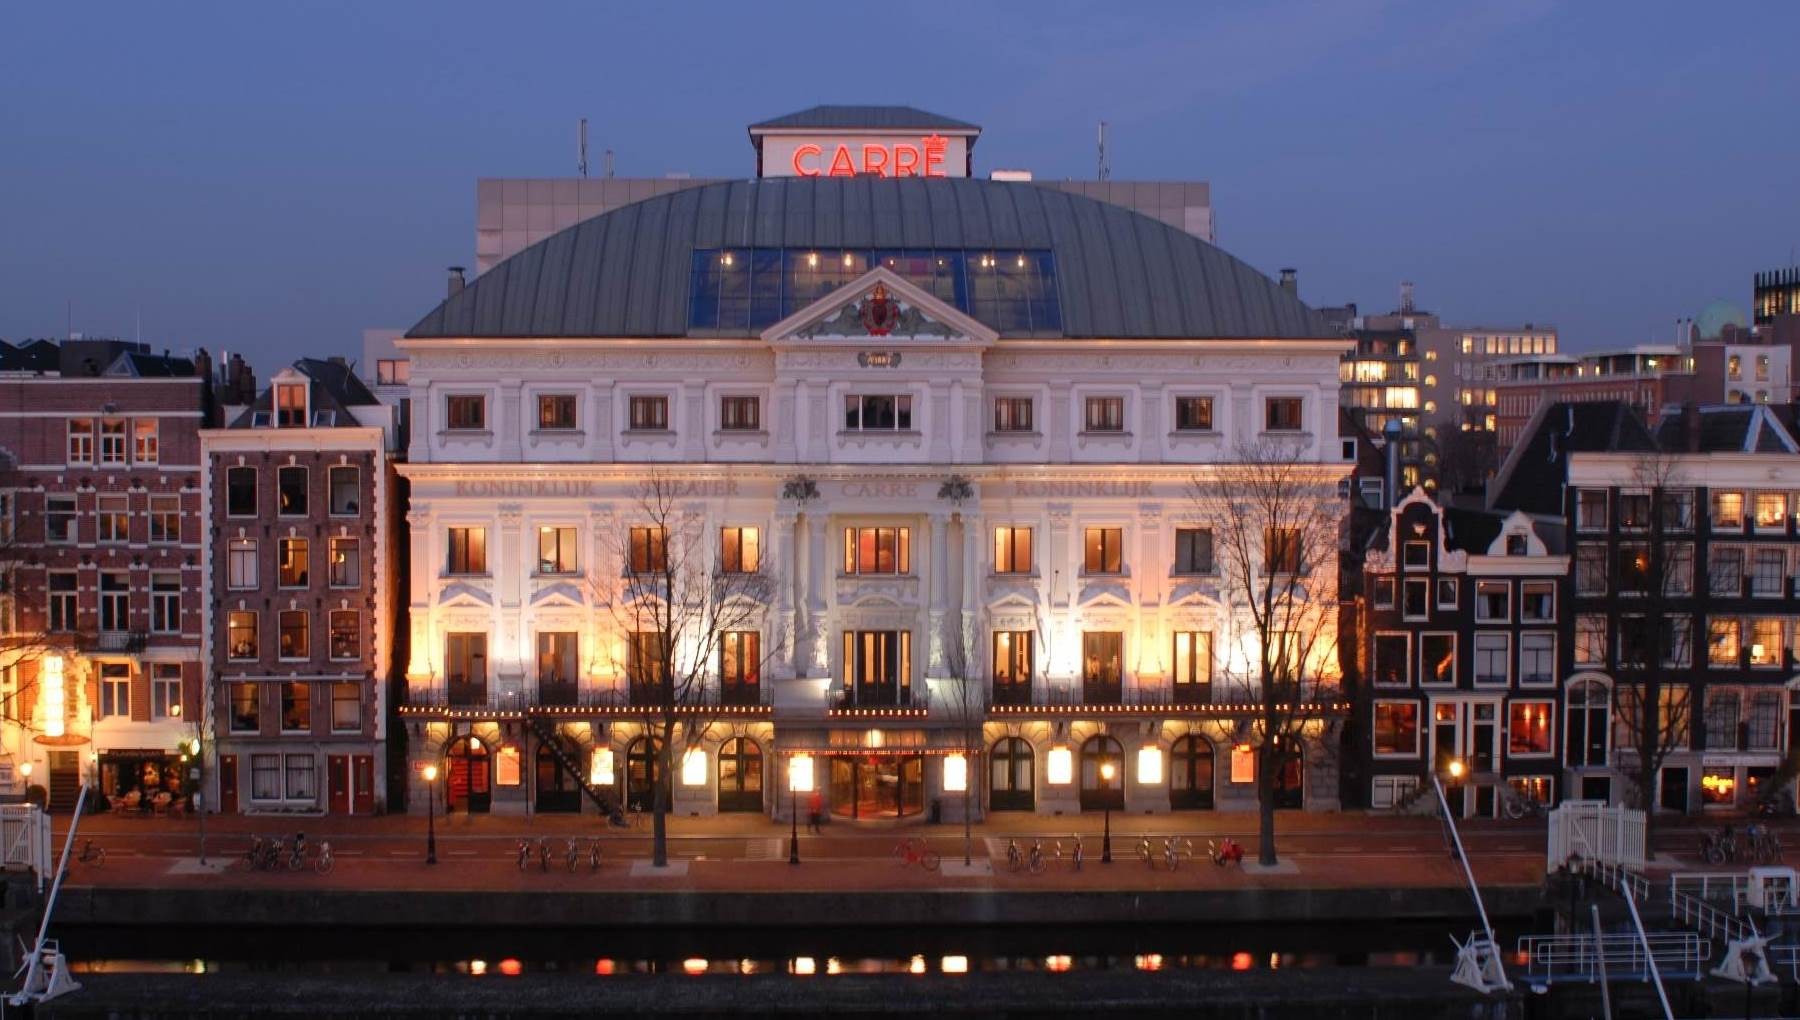 kkoninklijk theater carré Amsterdam